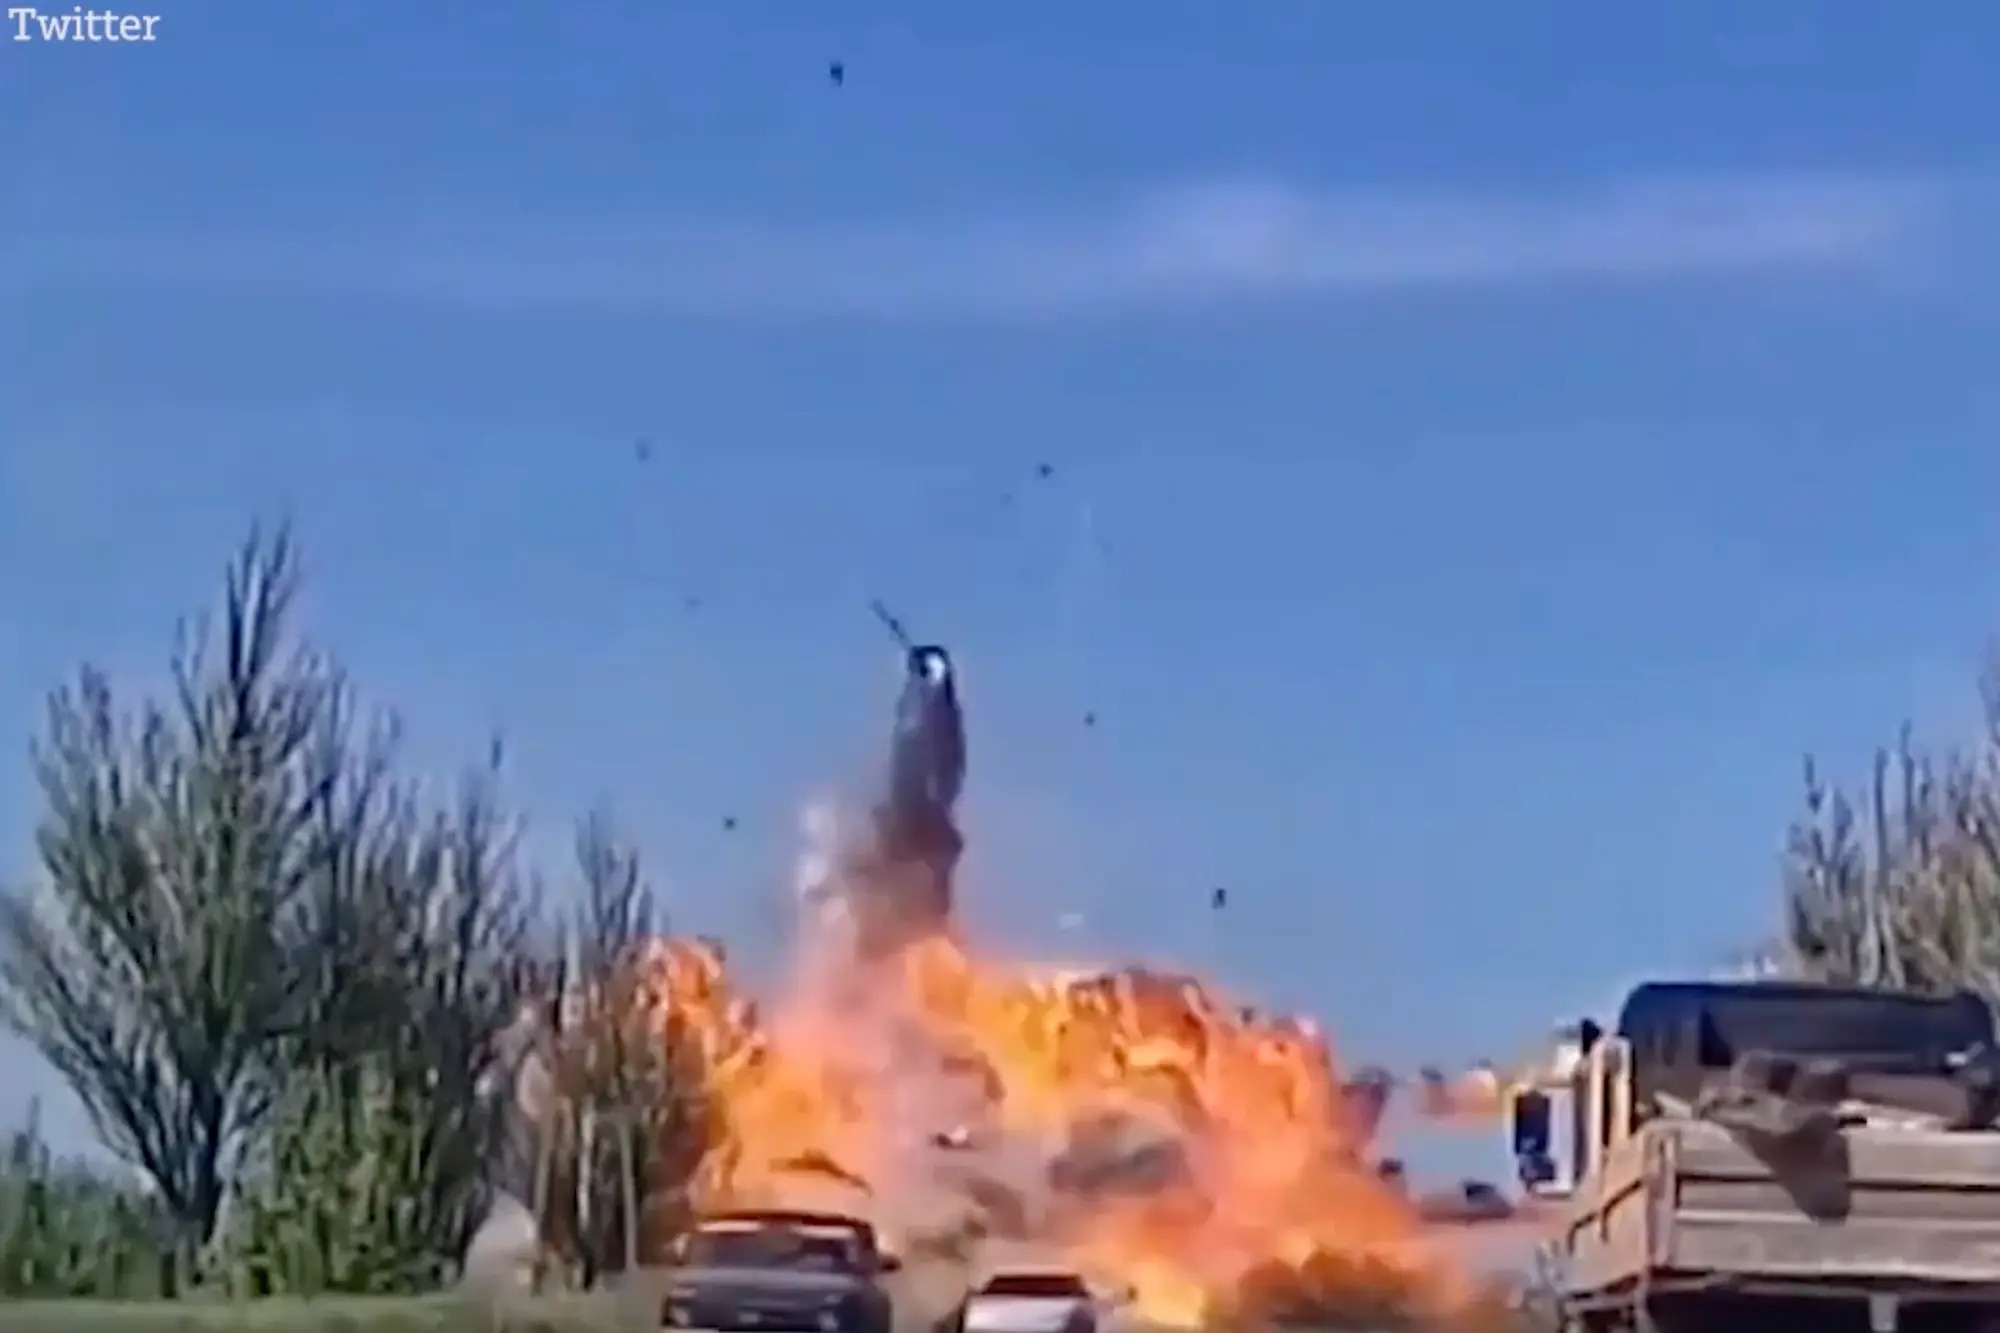 EN VIDEOS: Tanques rusos estallan en pedazos frente a la mirada atónita de conductores en Ucrania